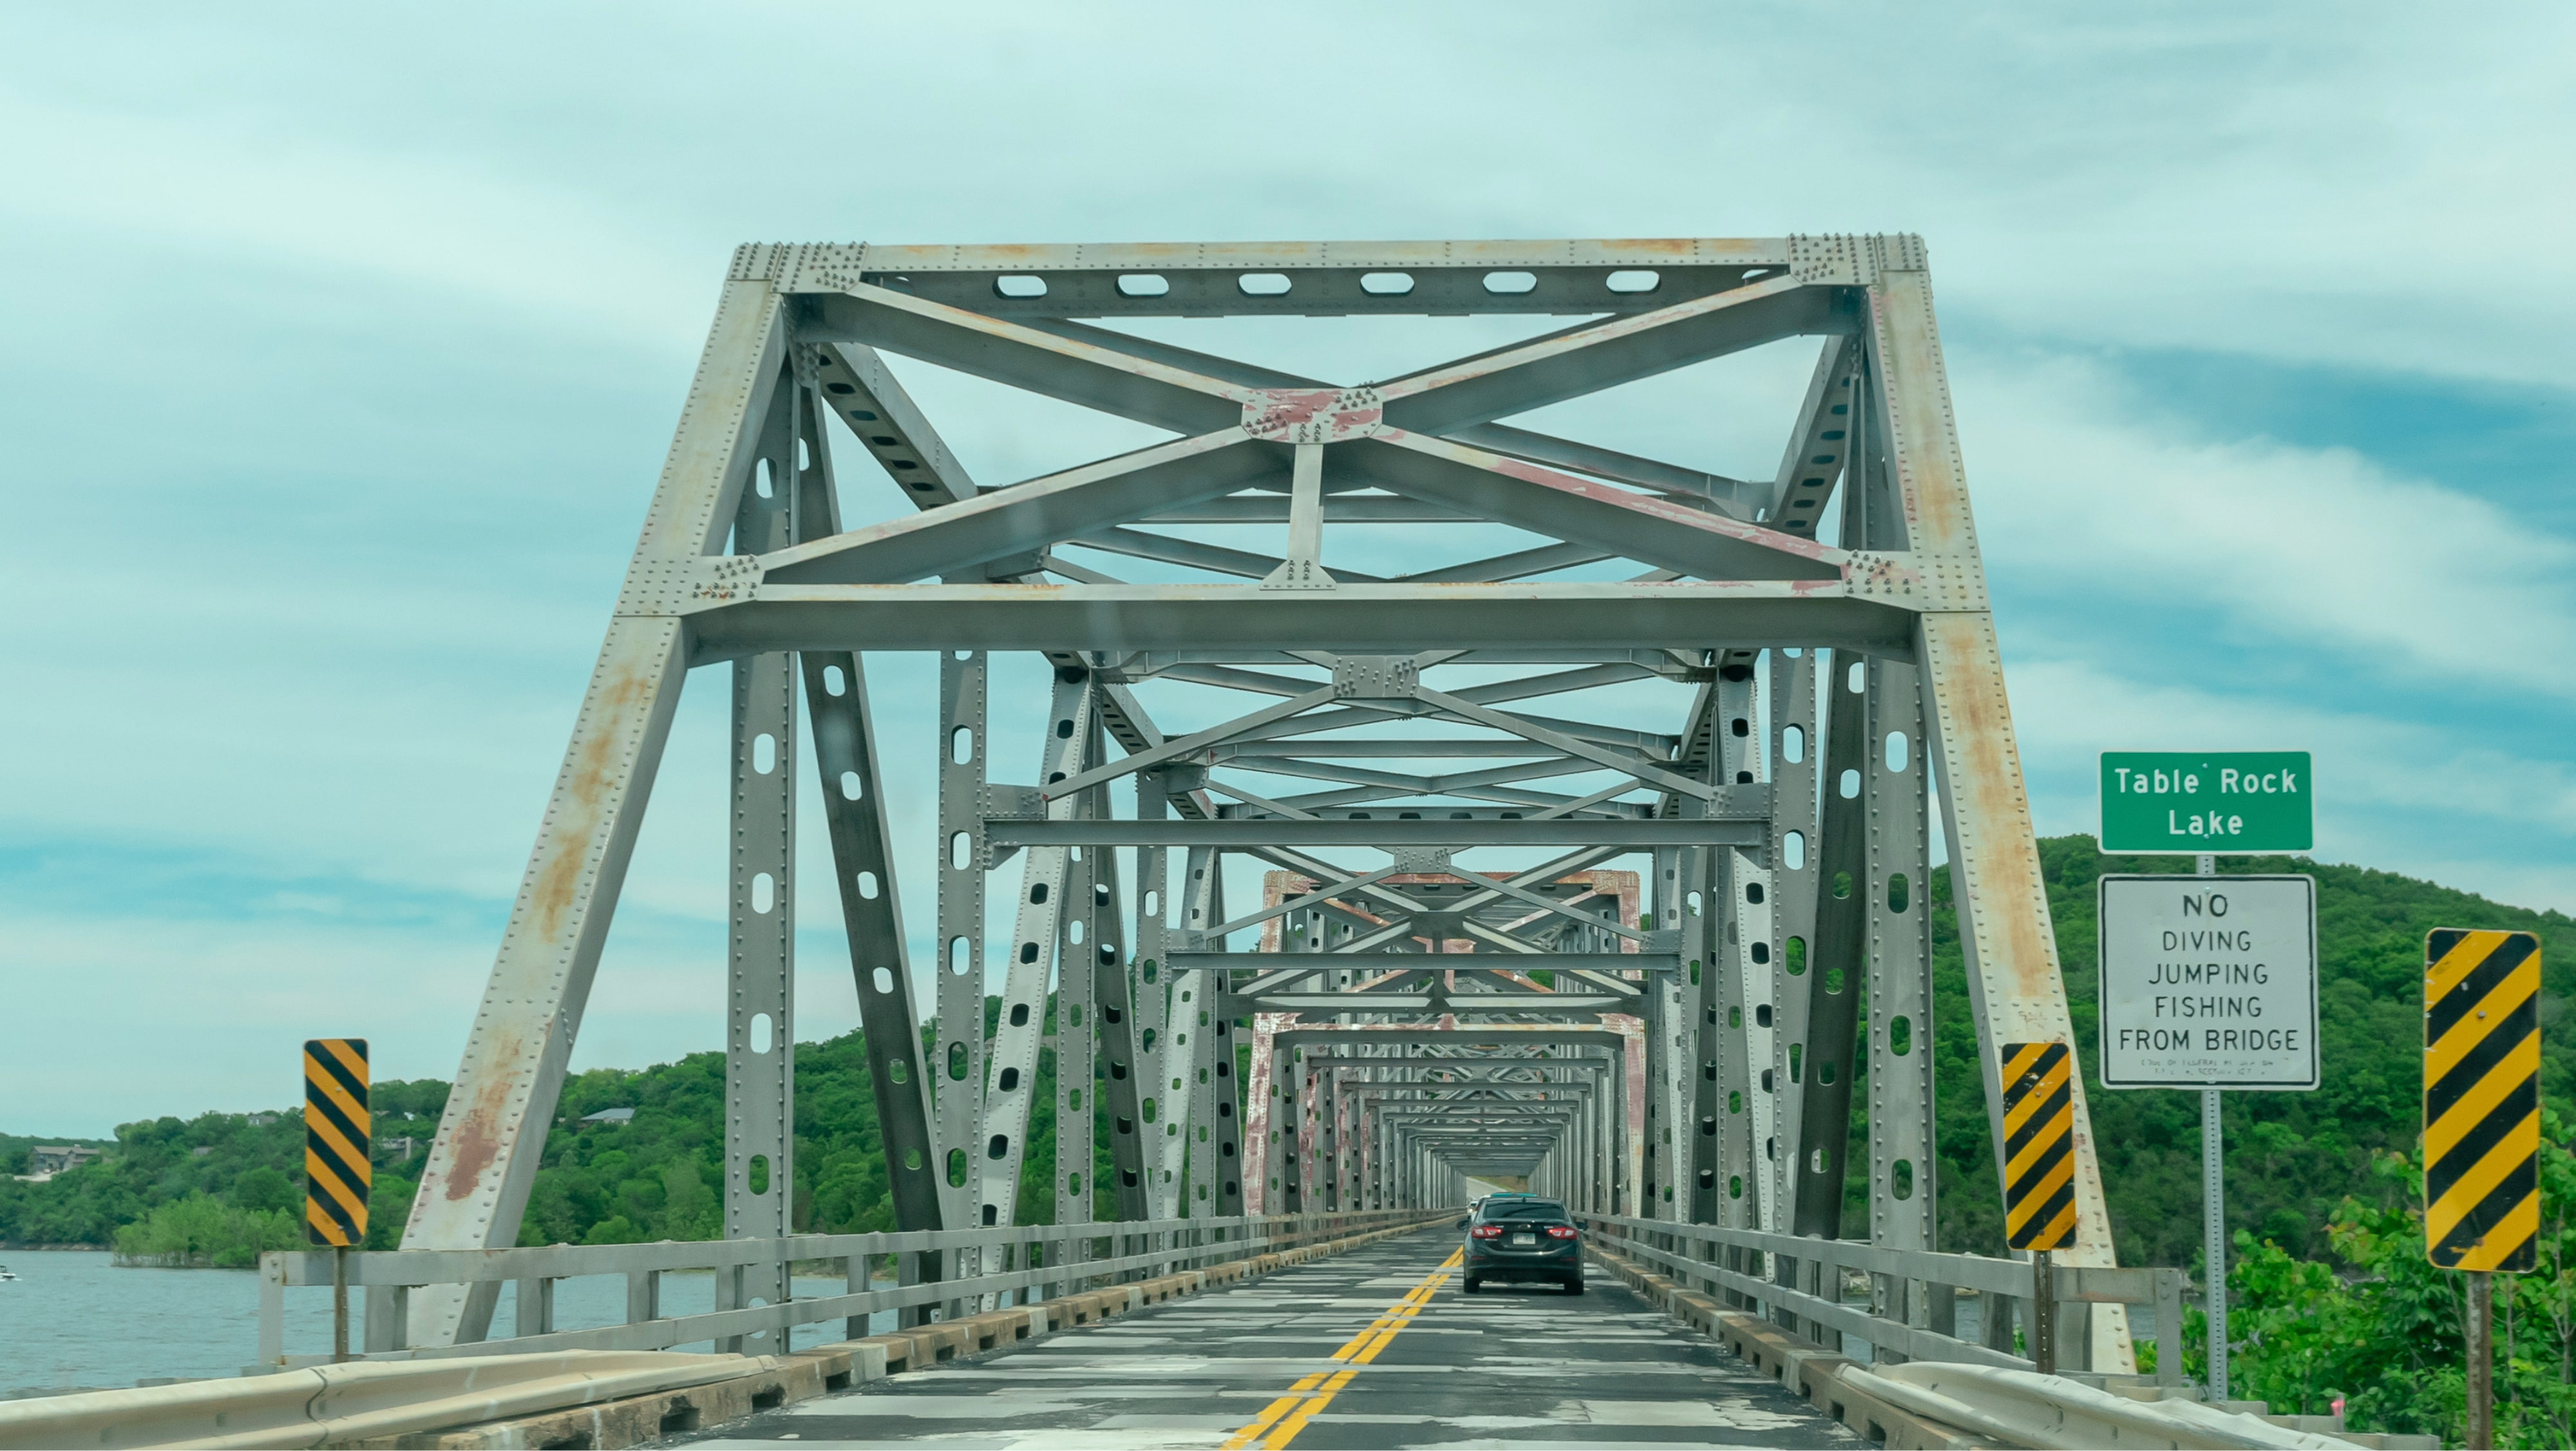 Bridge over Table Rock lake in Missouri